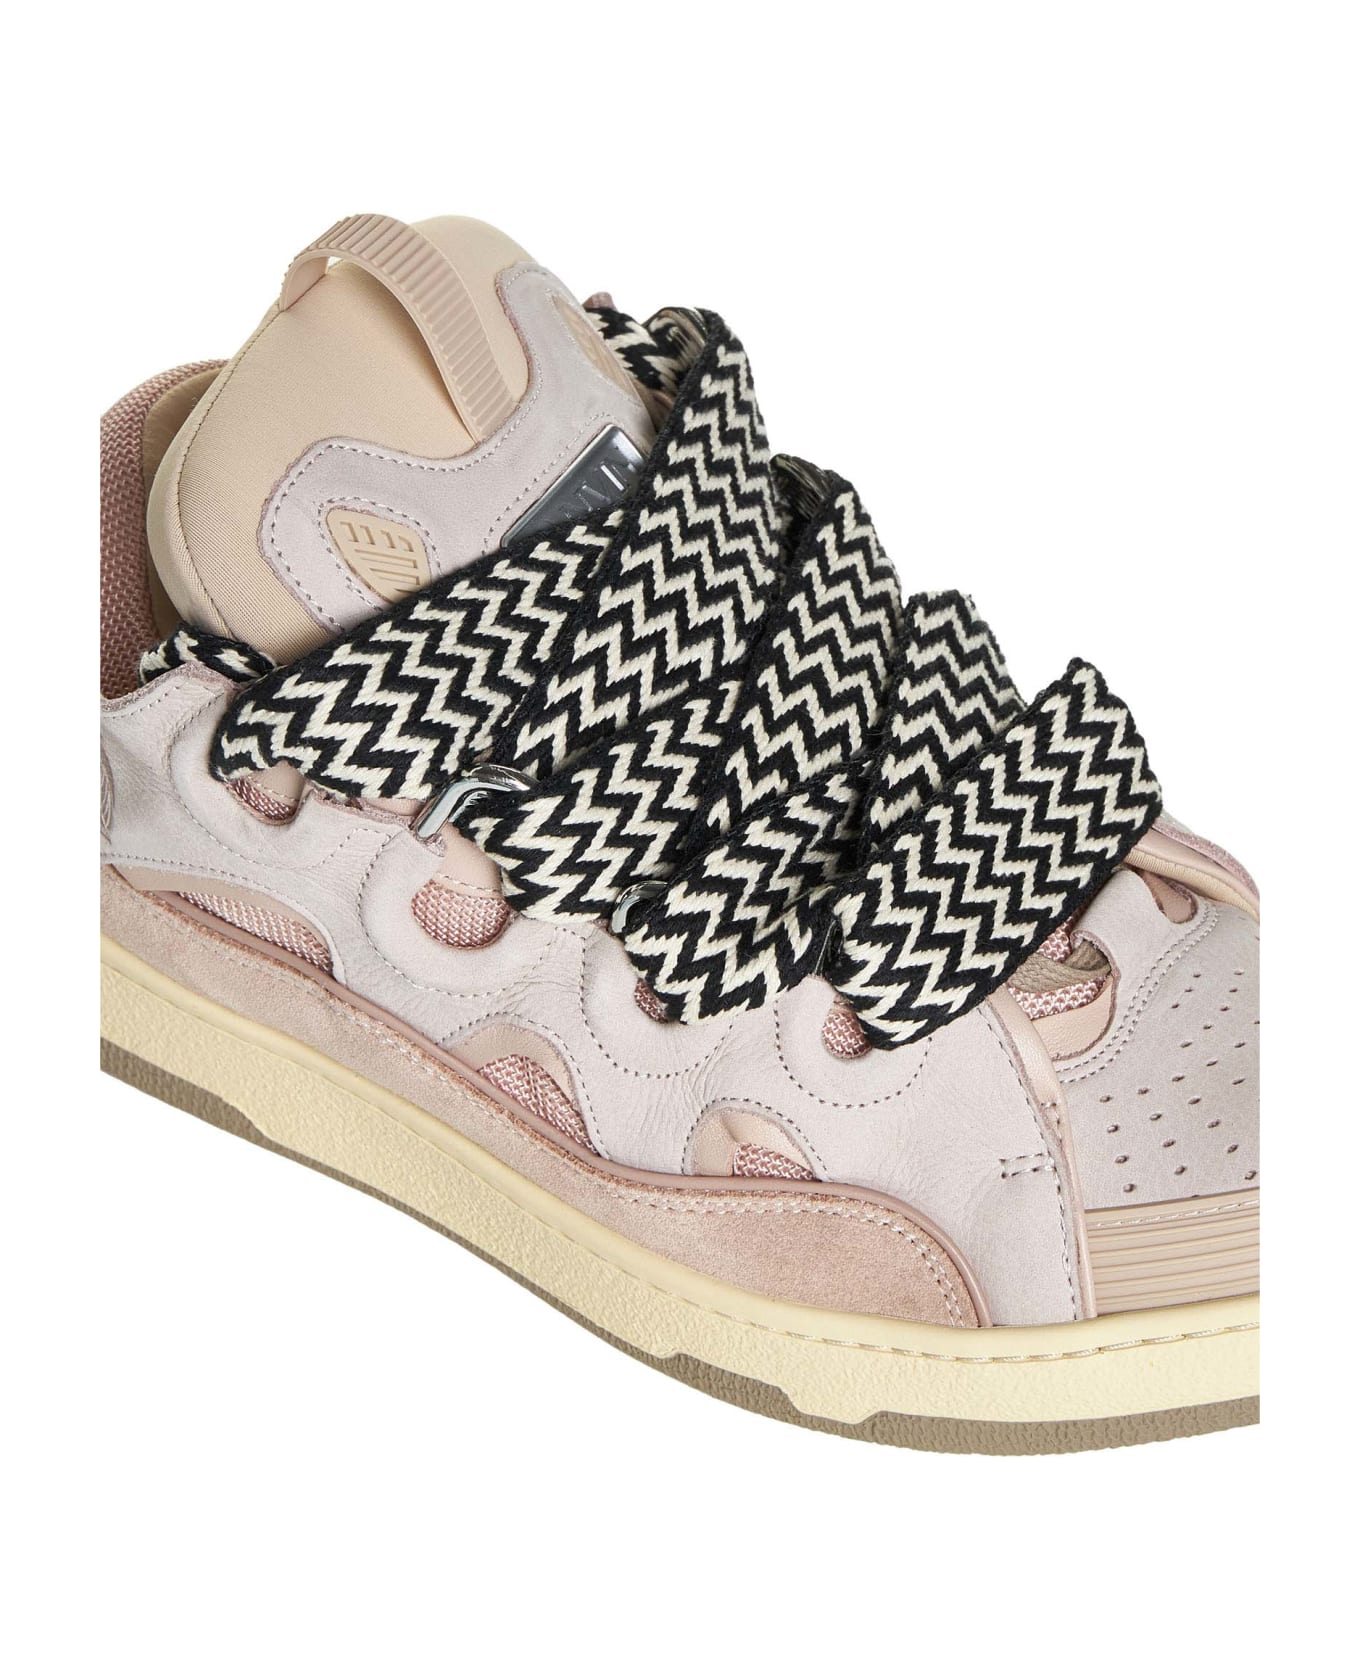 Lanvin Sneakers - Pale pink スニーカー